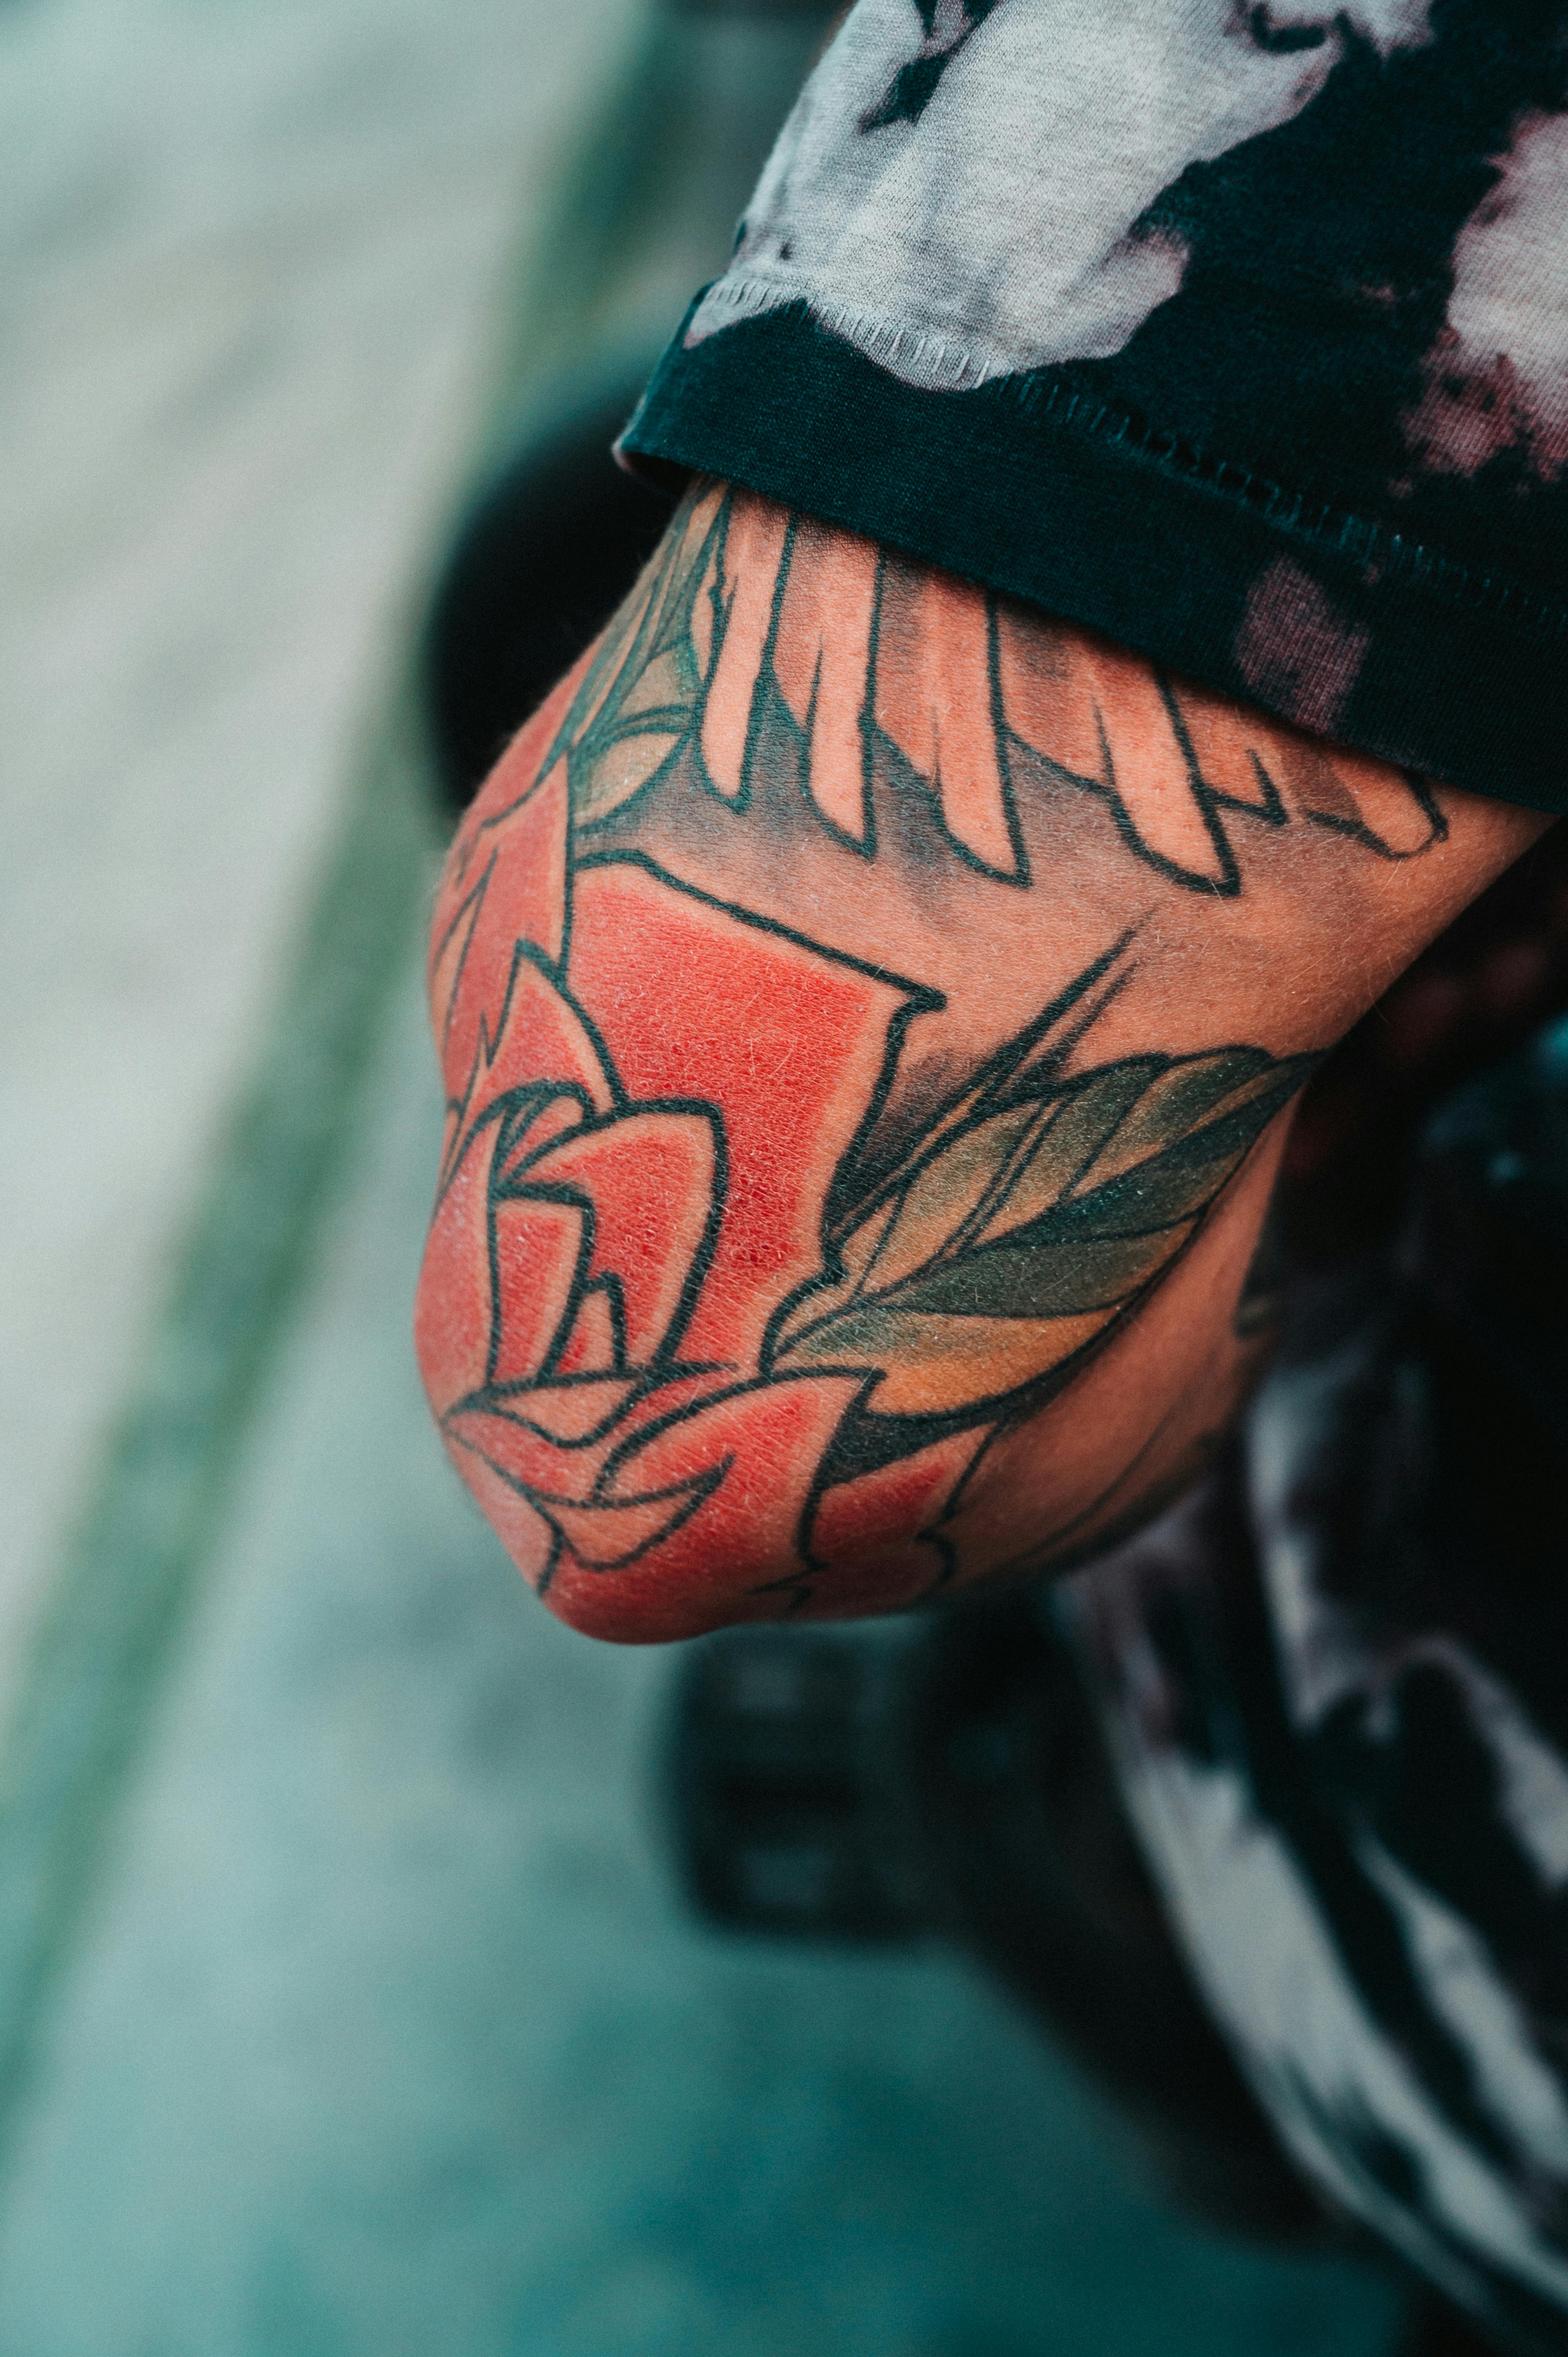 25 Amazing Spiderman Tattoo Designs to Die for  Tattoo Twist